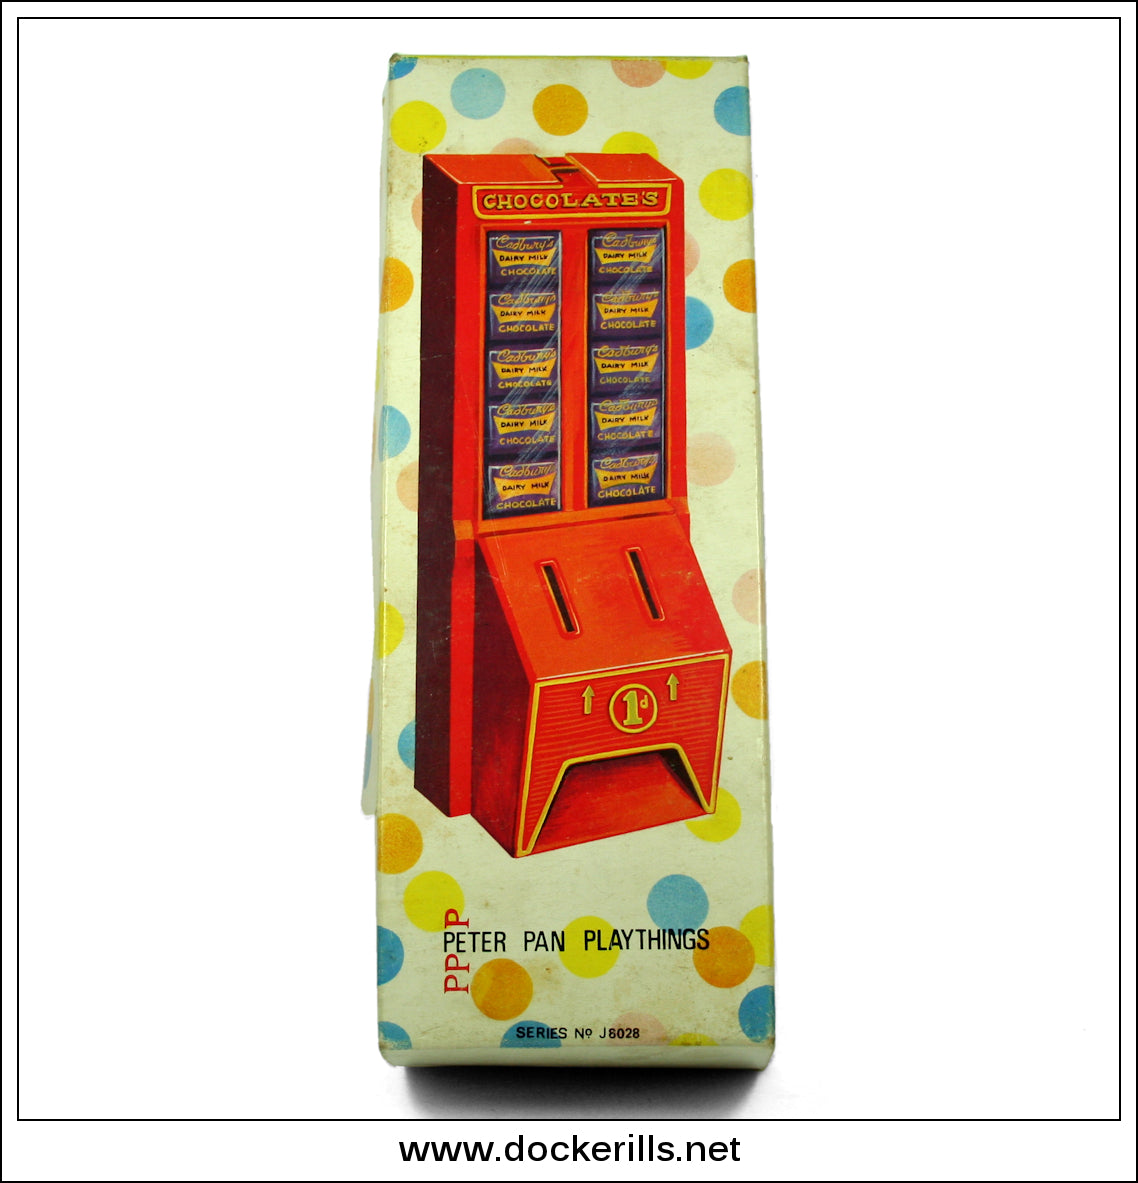 The Cadbury Chocolate Machine - can you still buy them?